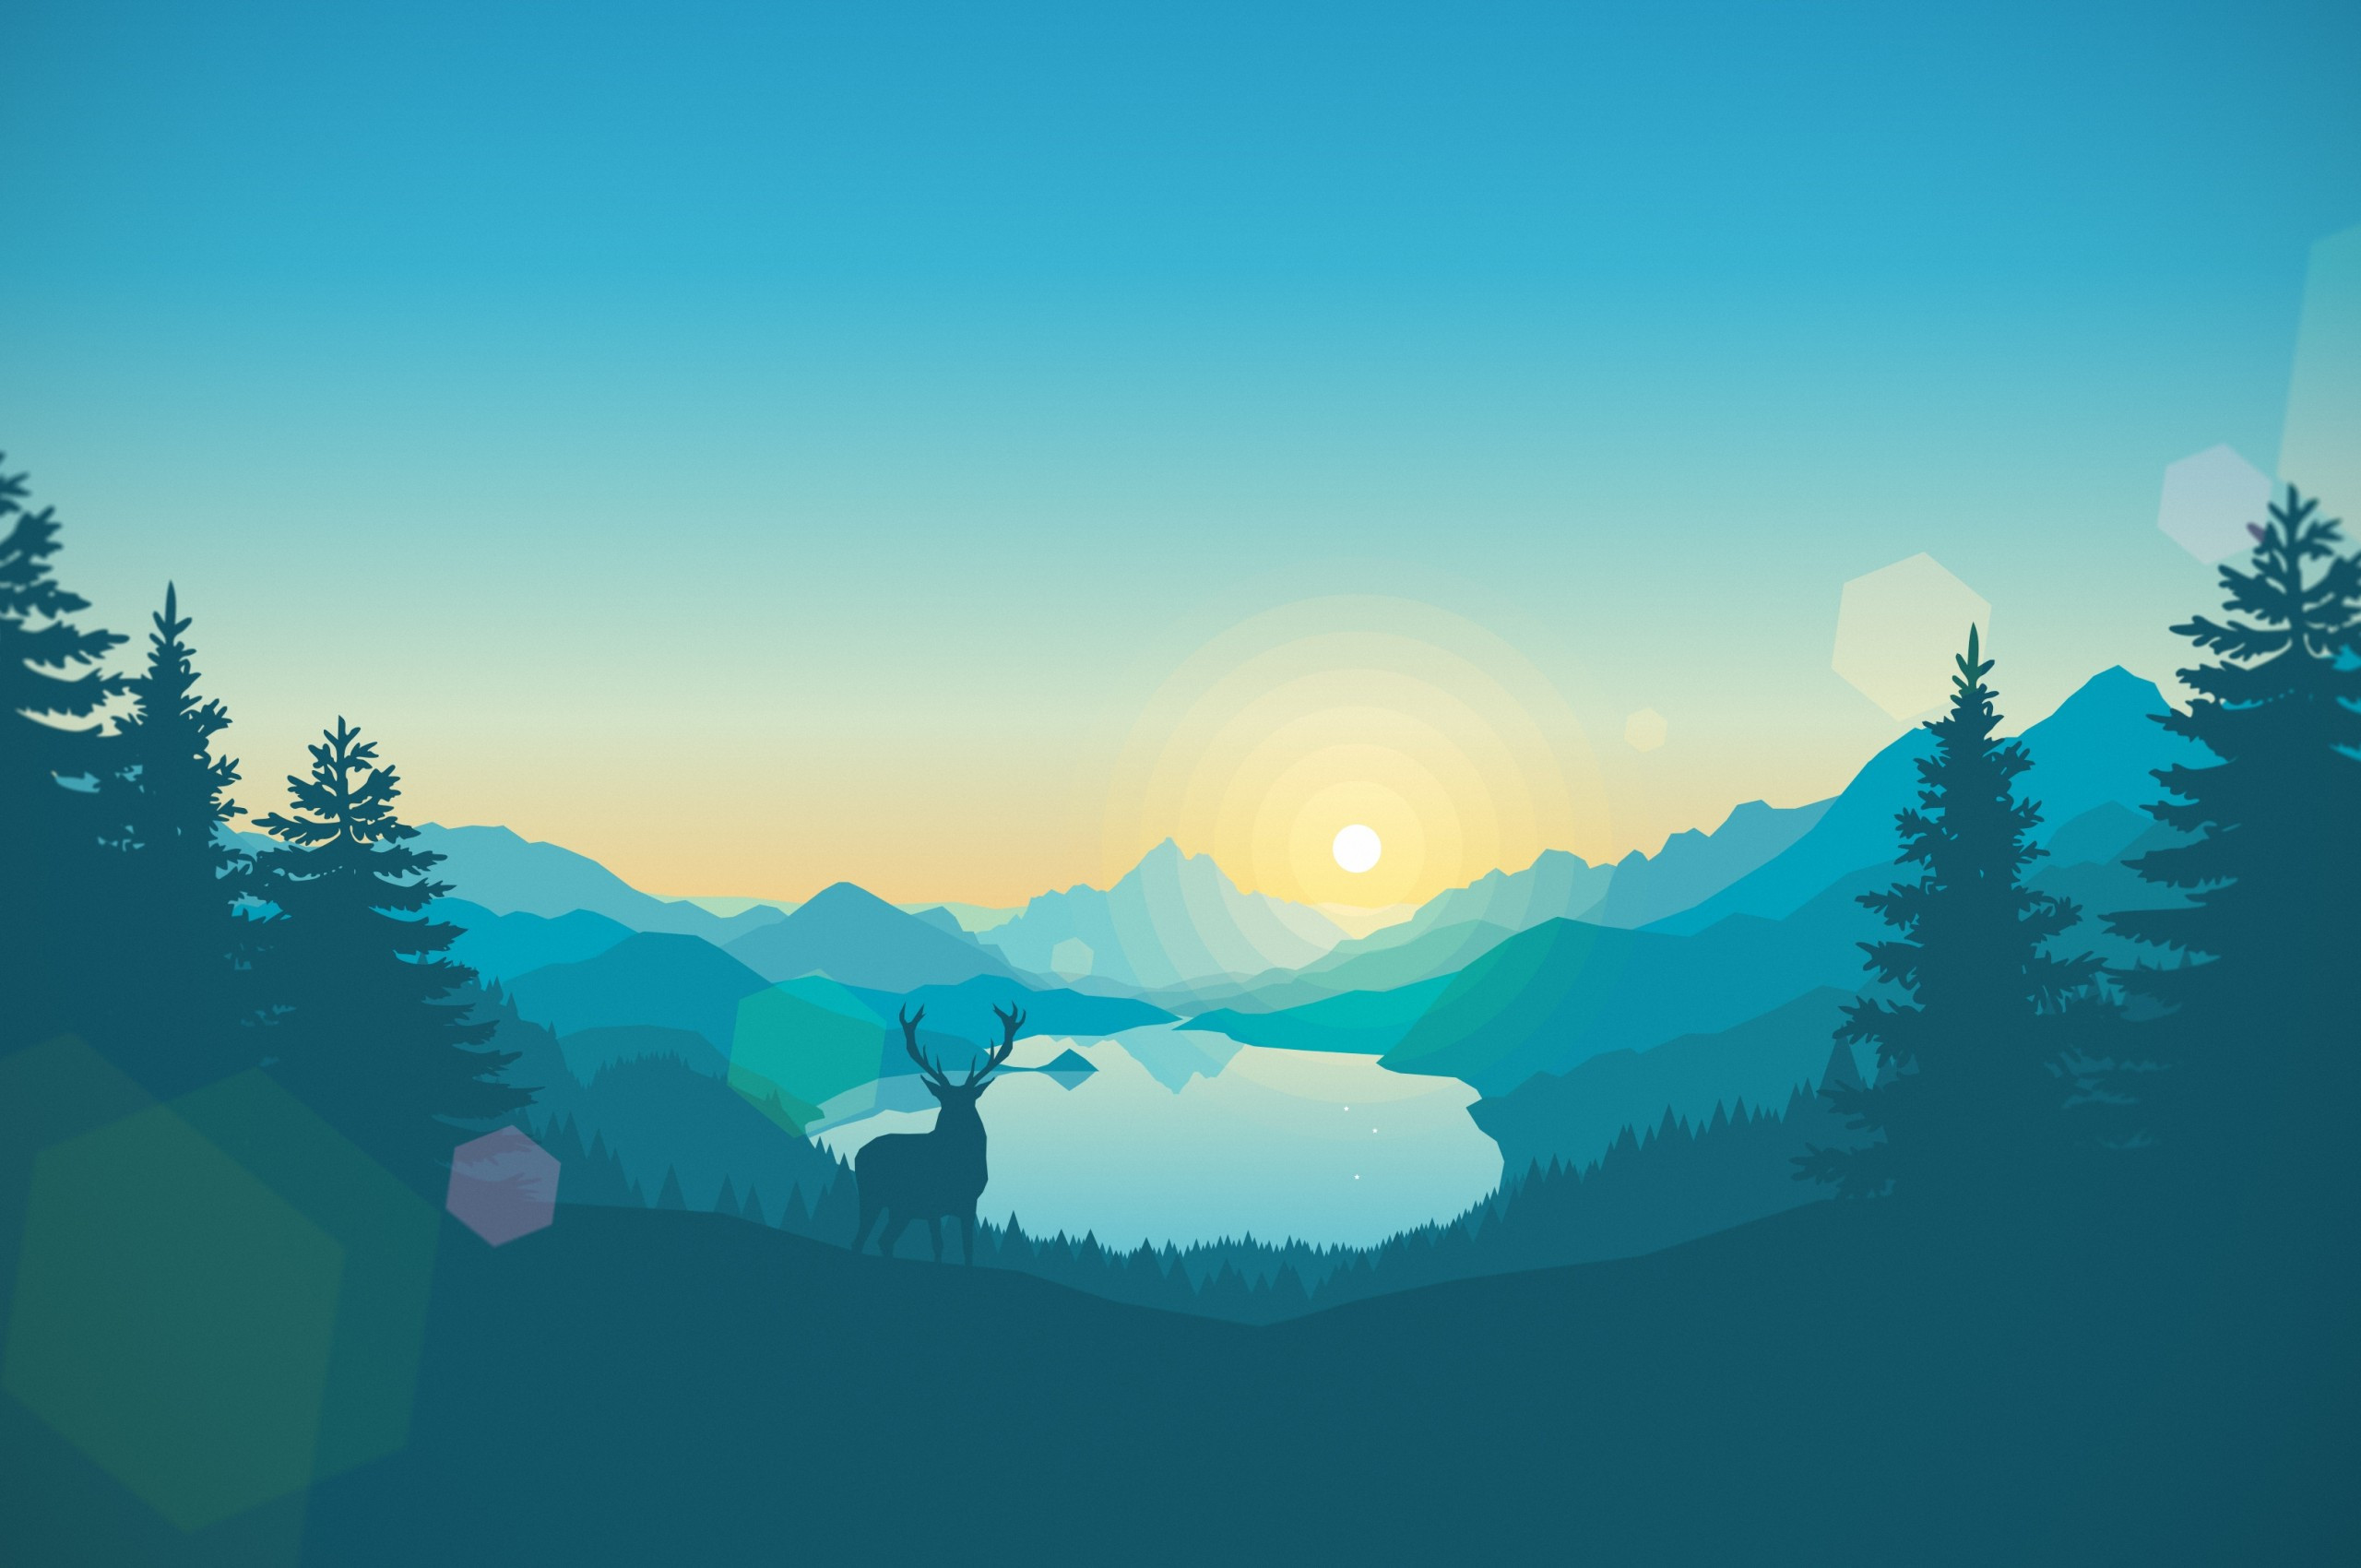 Download 2560x1700 Flat Landscape, Minimalism, Deer, Lake, Mountains, Digital Art Wallpaper for Chromebook Pixel